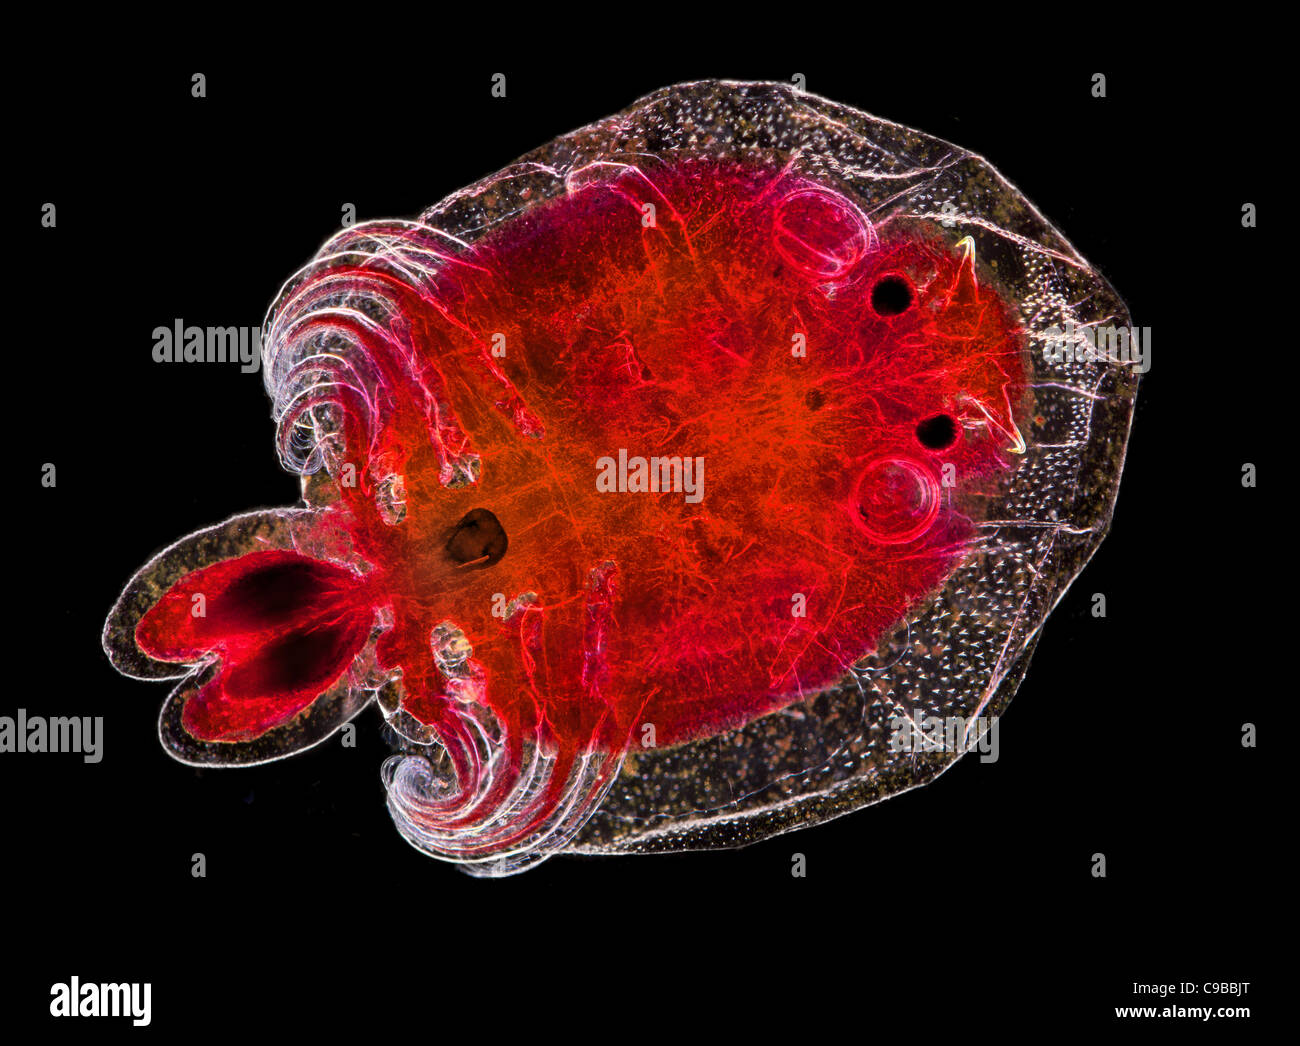 Argulus Fische Parasiten, Probe, Dunkelfeld Mikrophotographie gebeizt Stockfoto